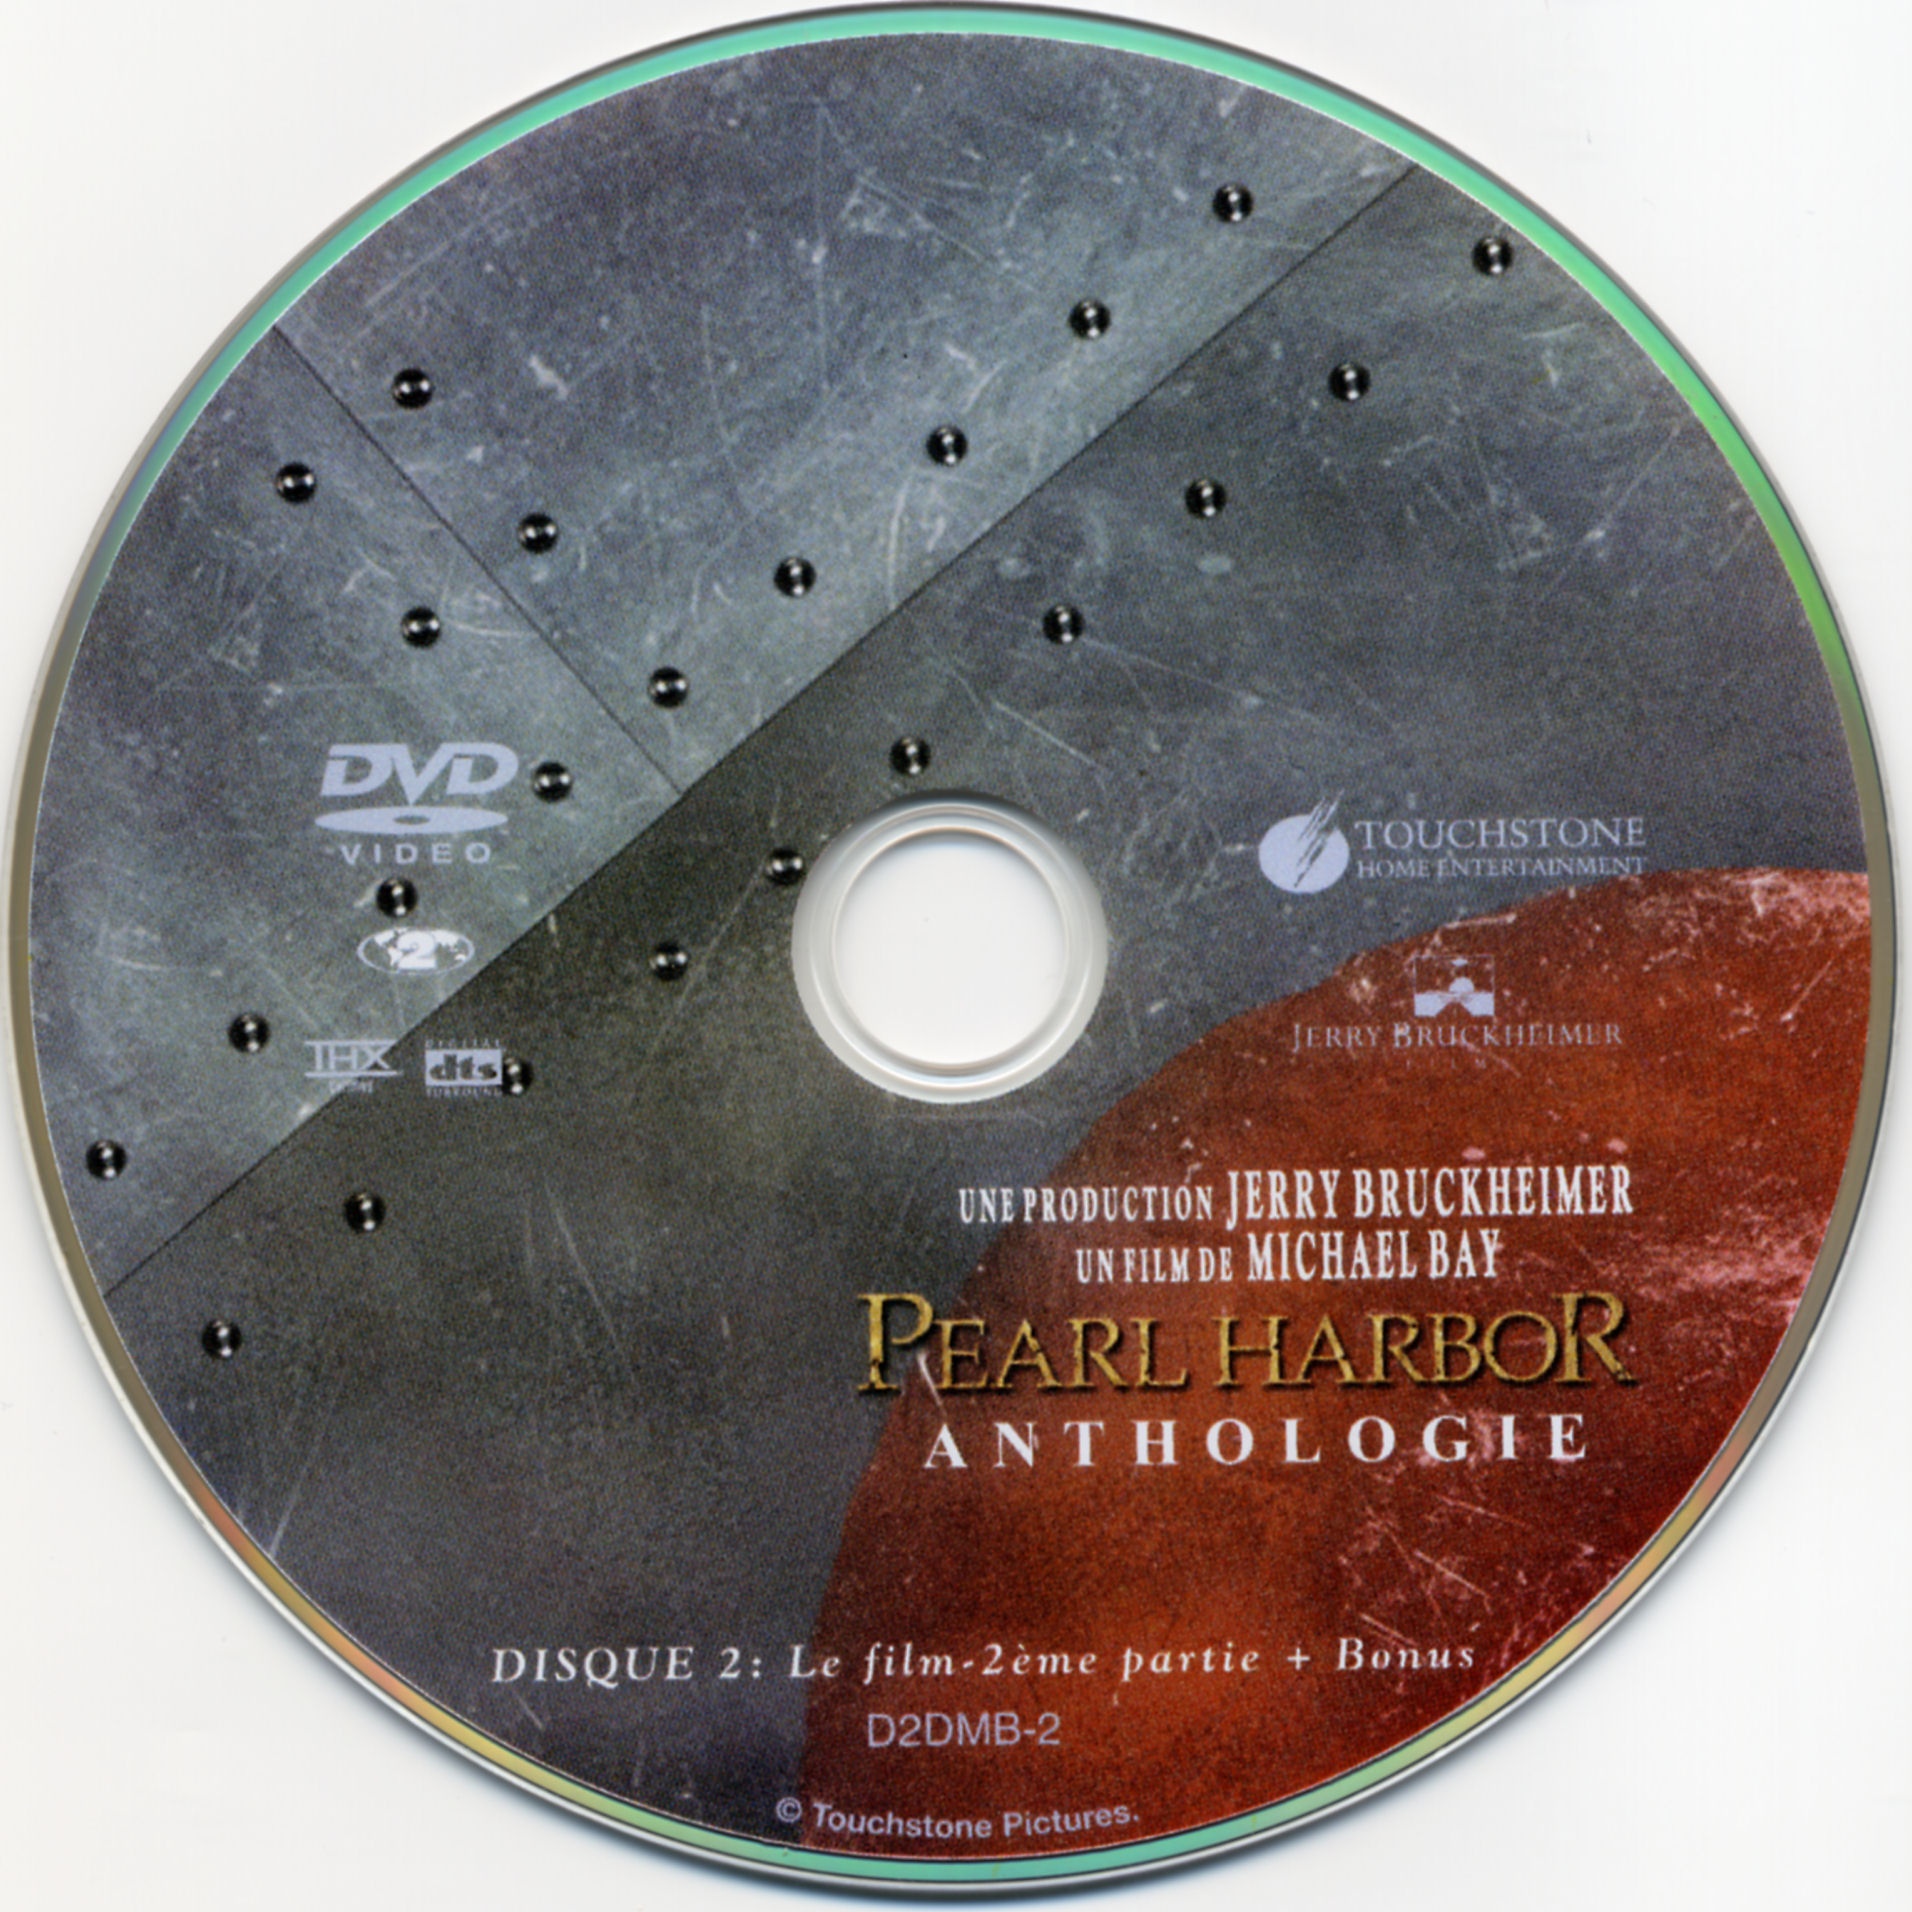 Pearl Harbor Anthologie DISC 2